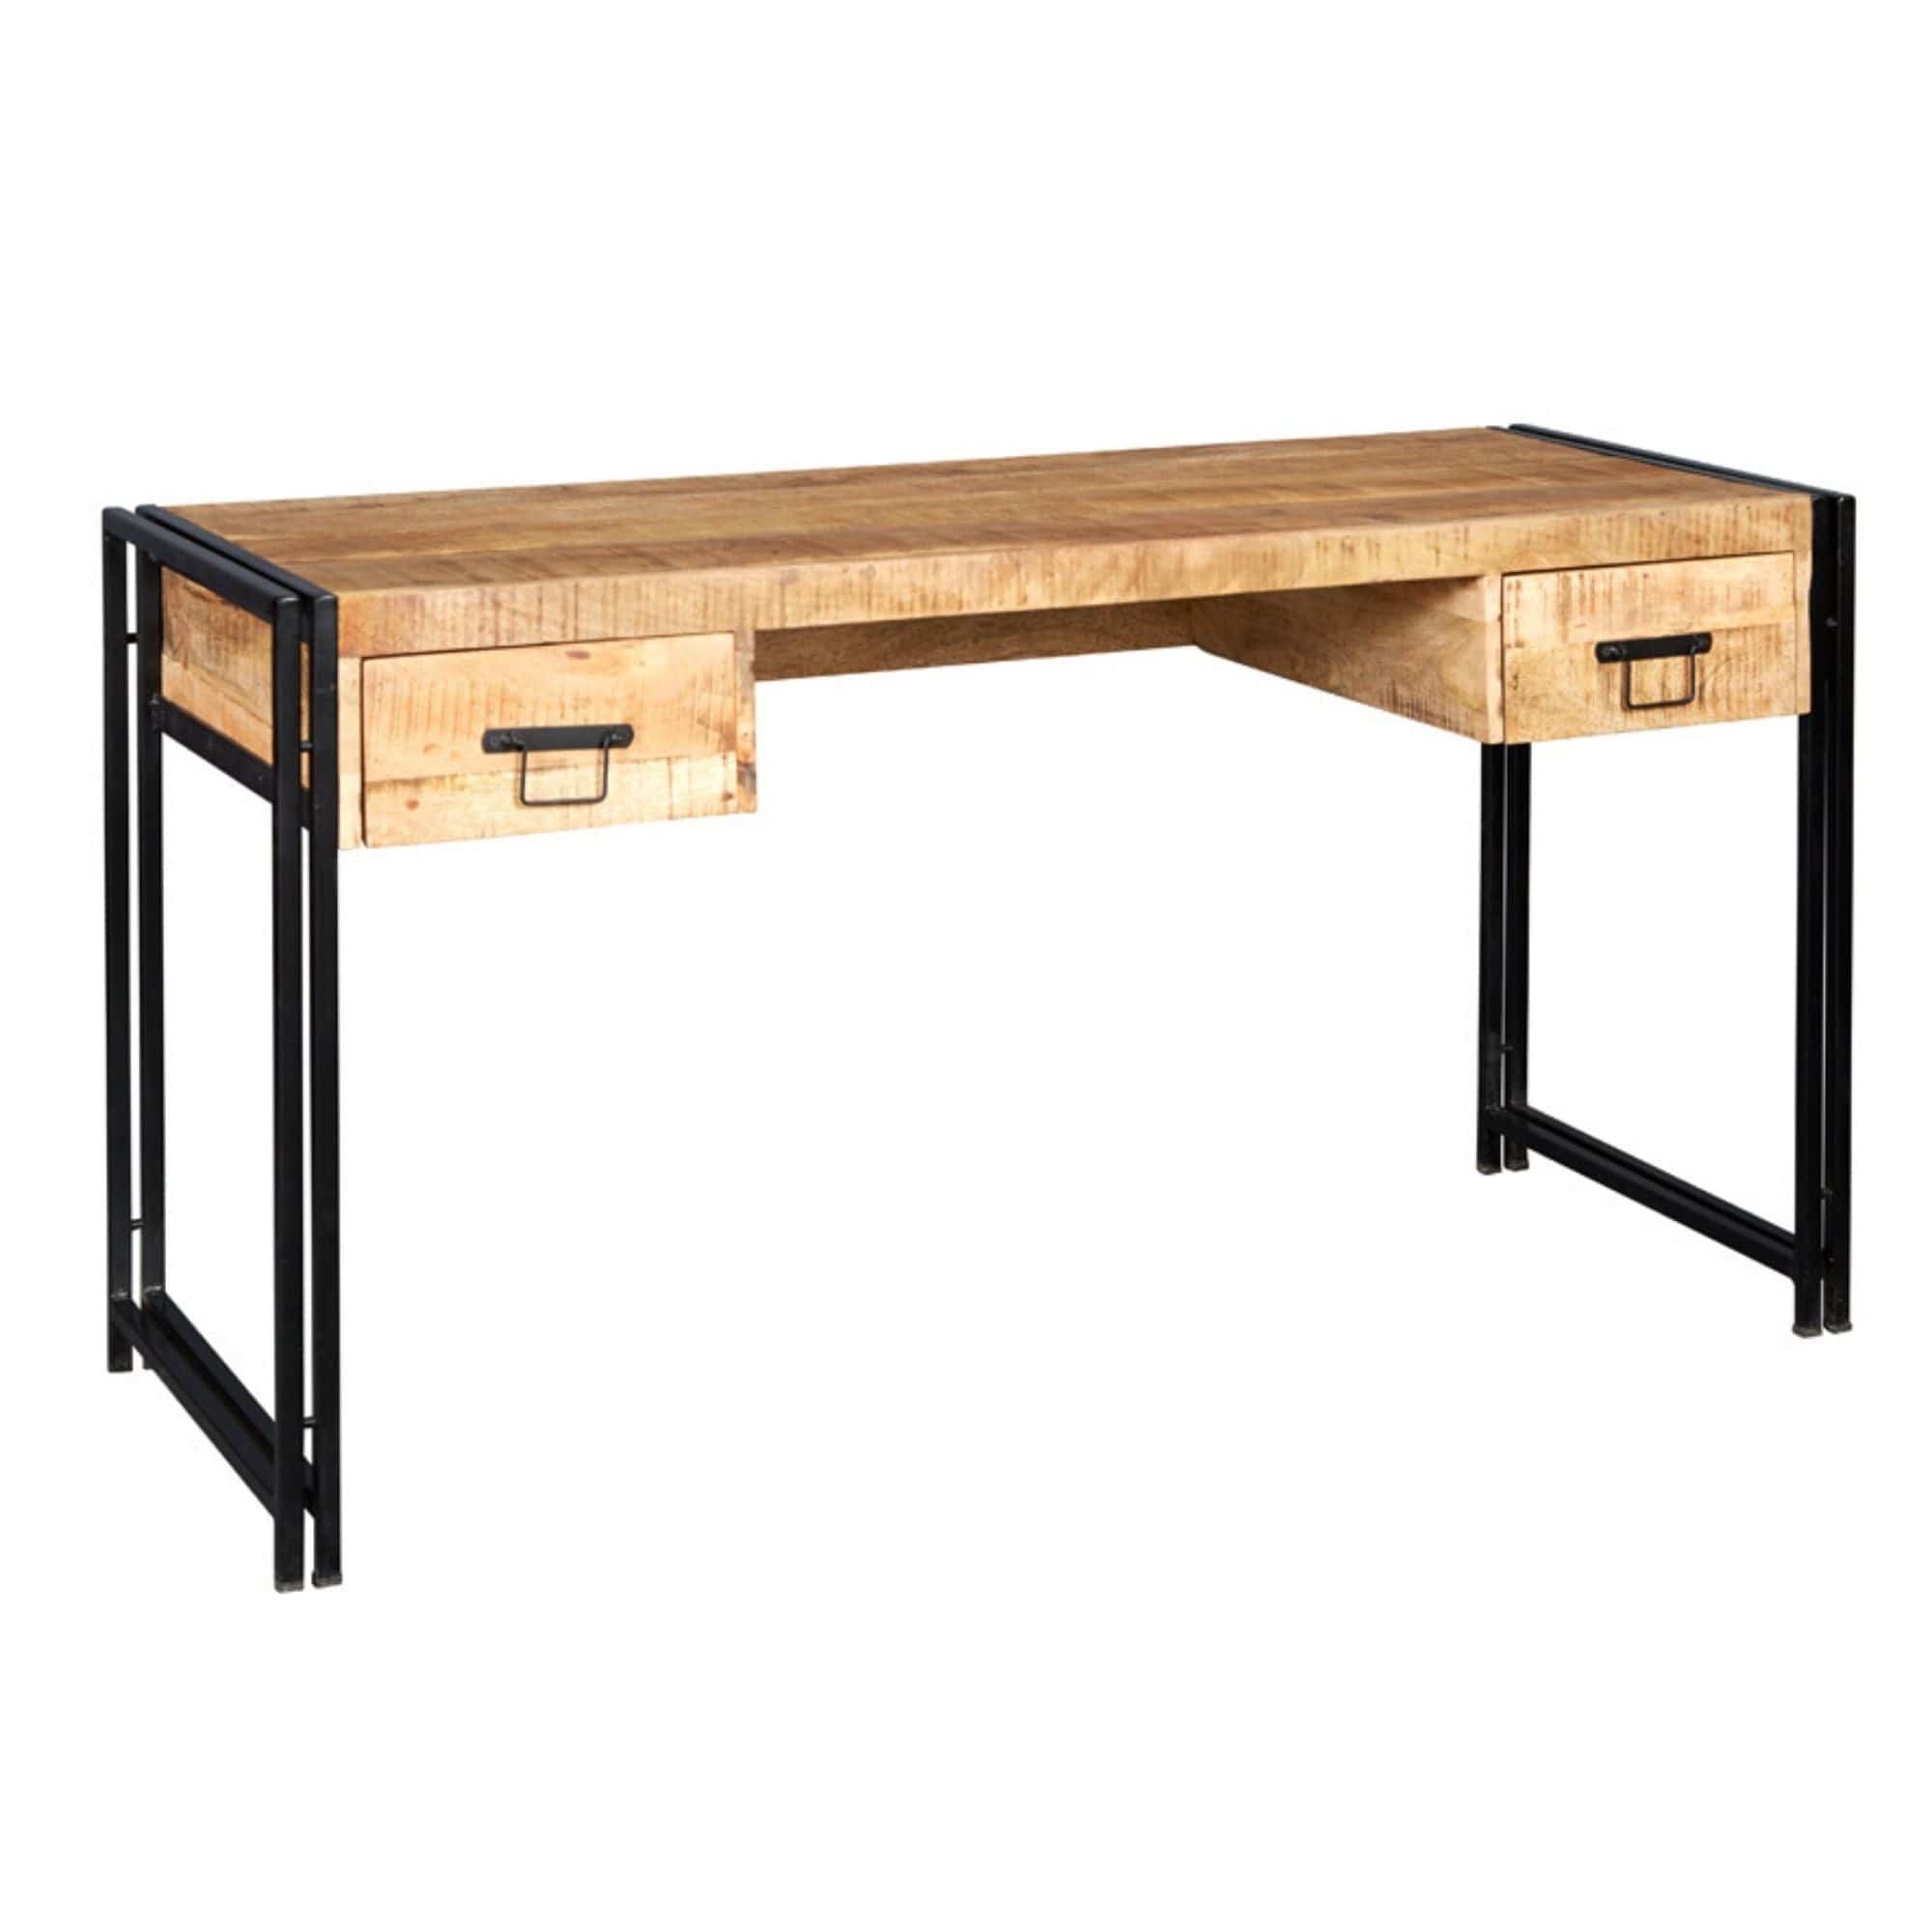 LOFT Industrial Home Study Desk in raw solid mango wood and reclaimed metal - MalletandPlane.com